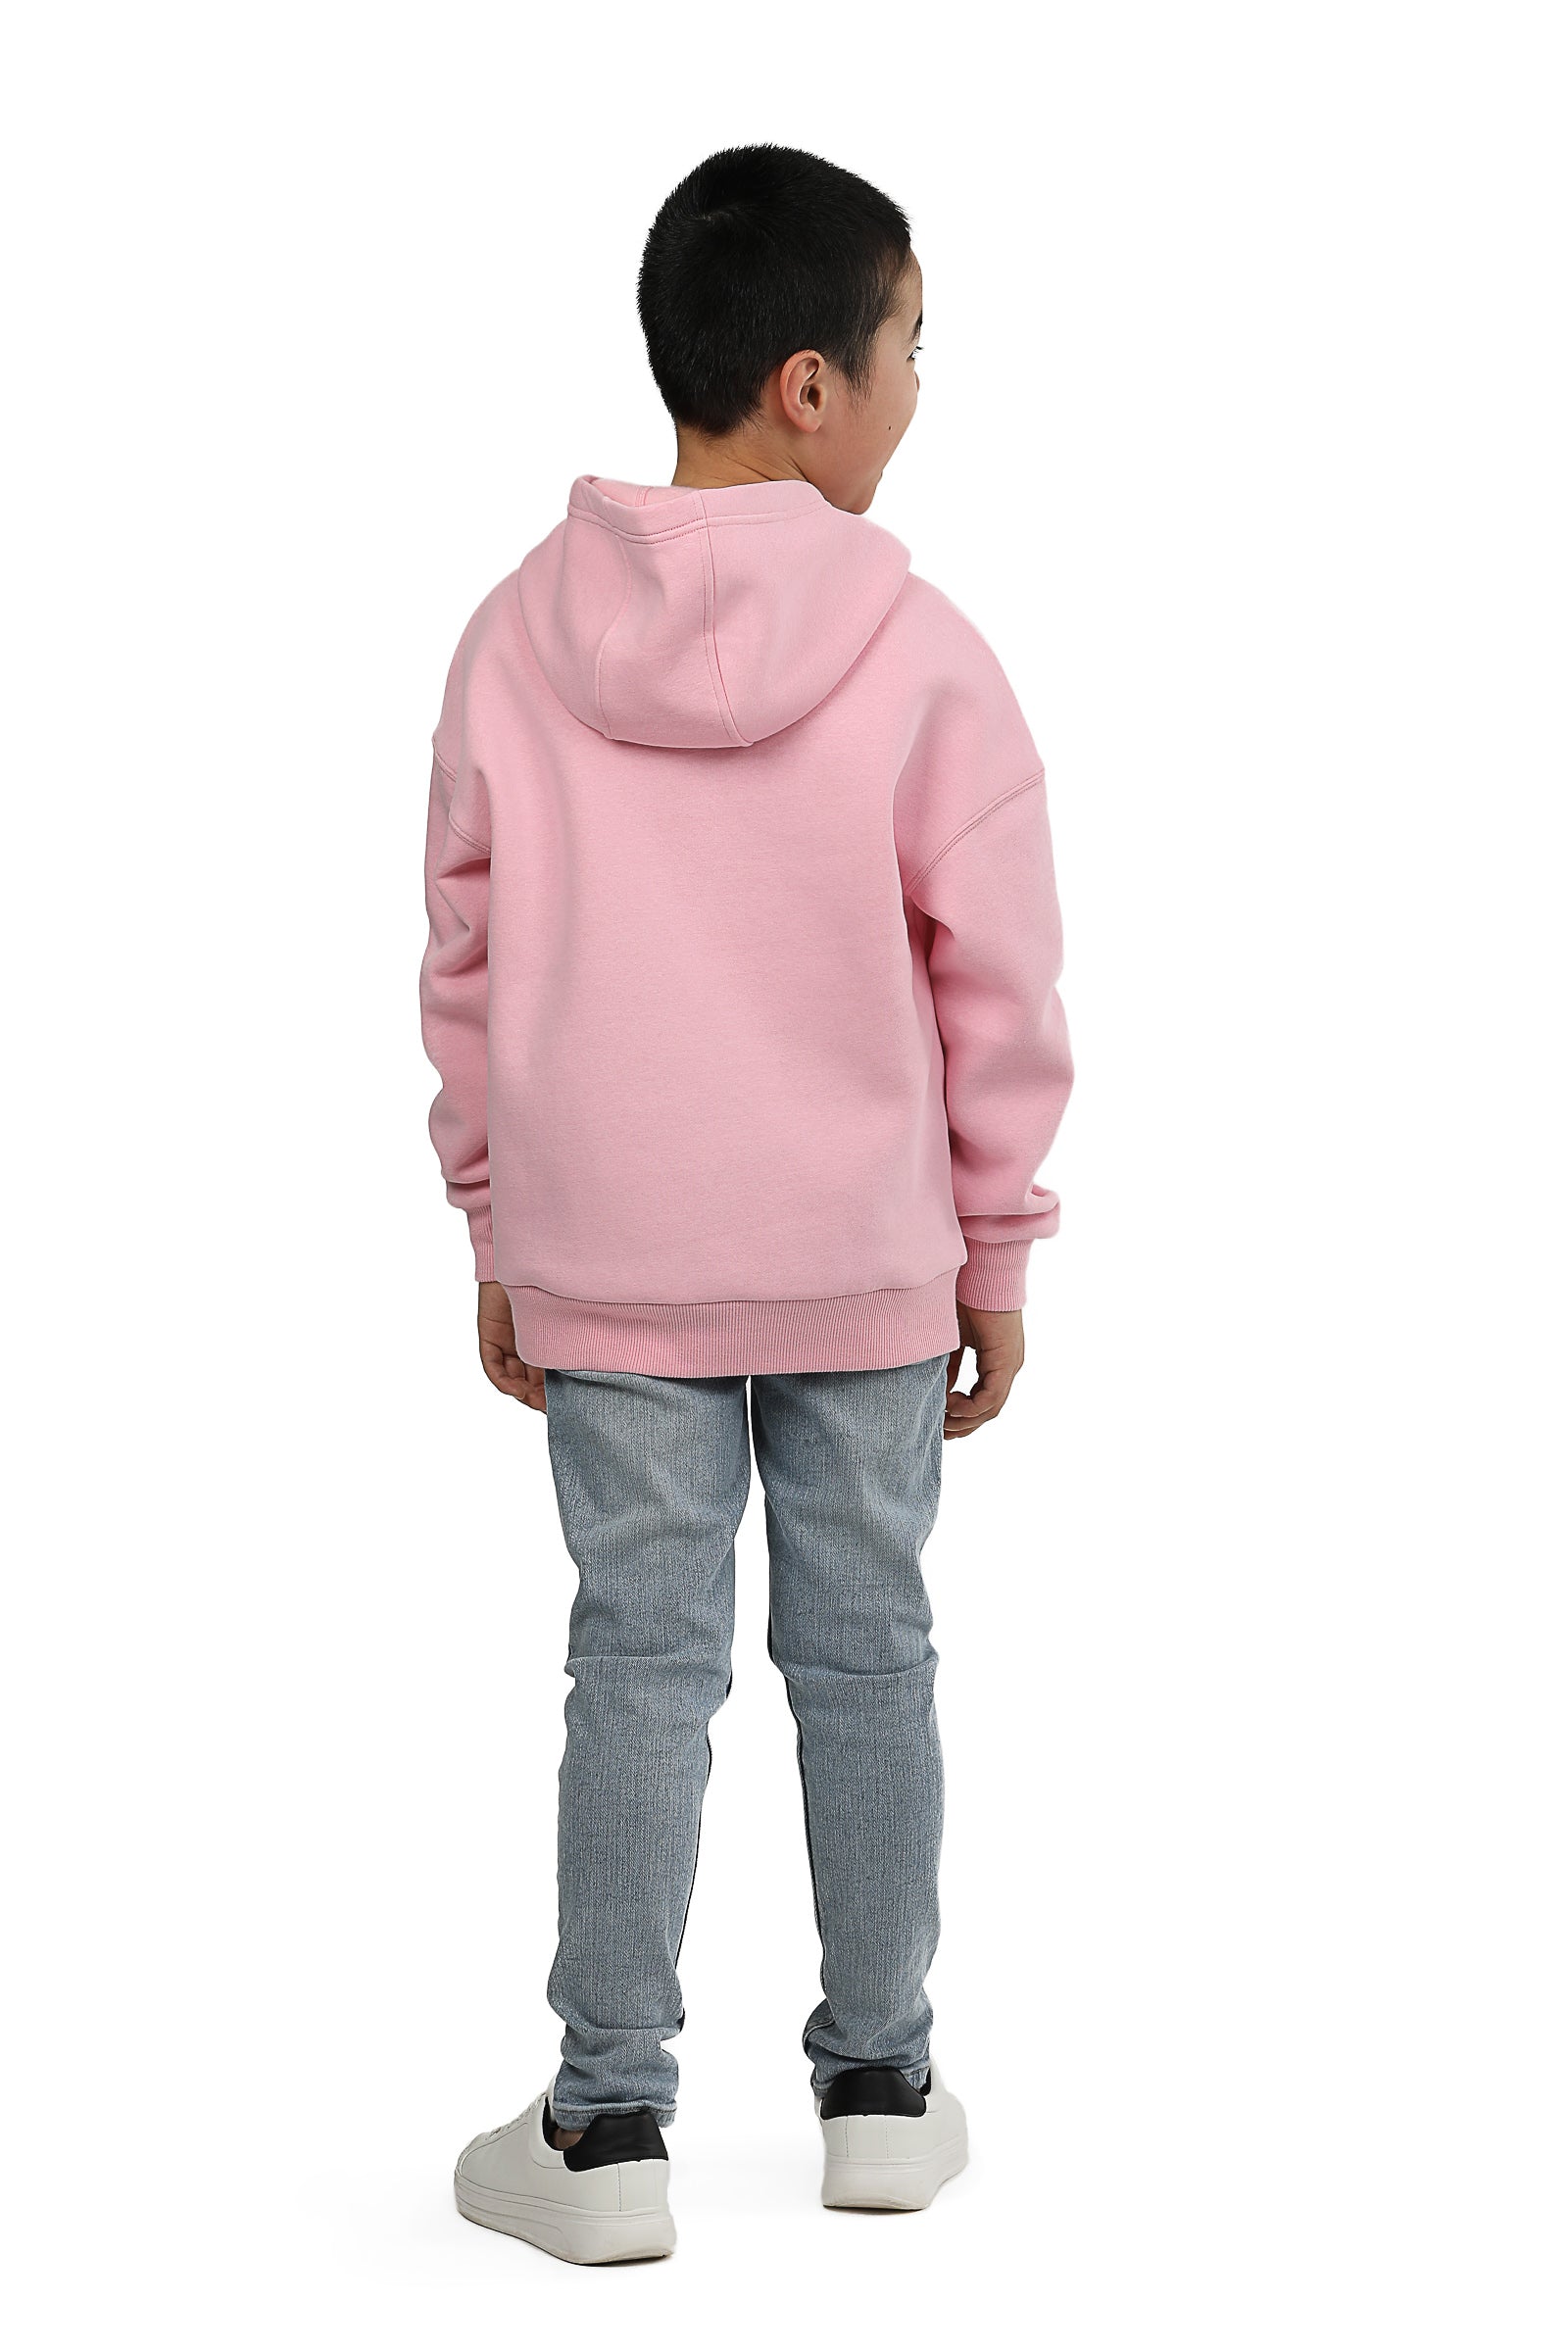 Kids Cooper hoodie in bubble gum pink